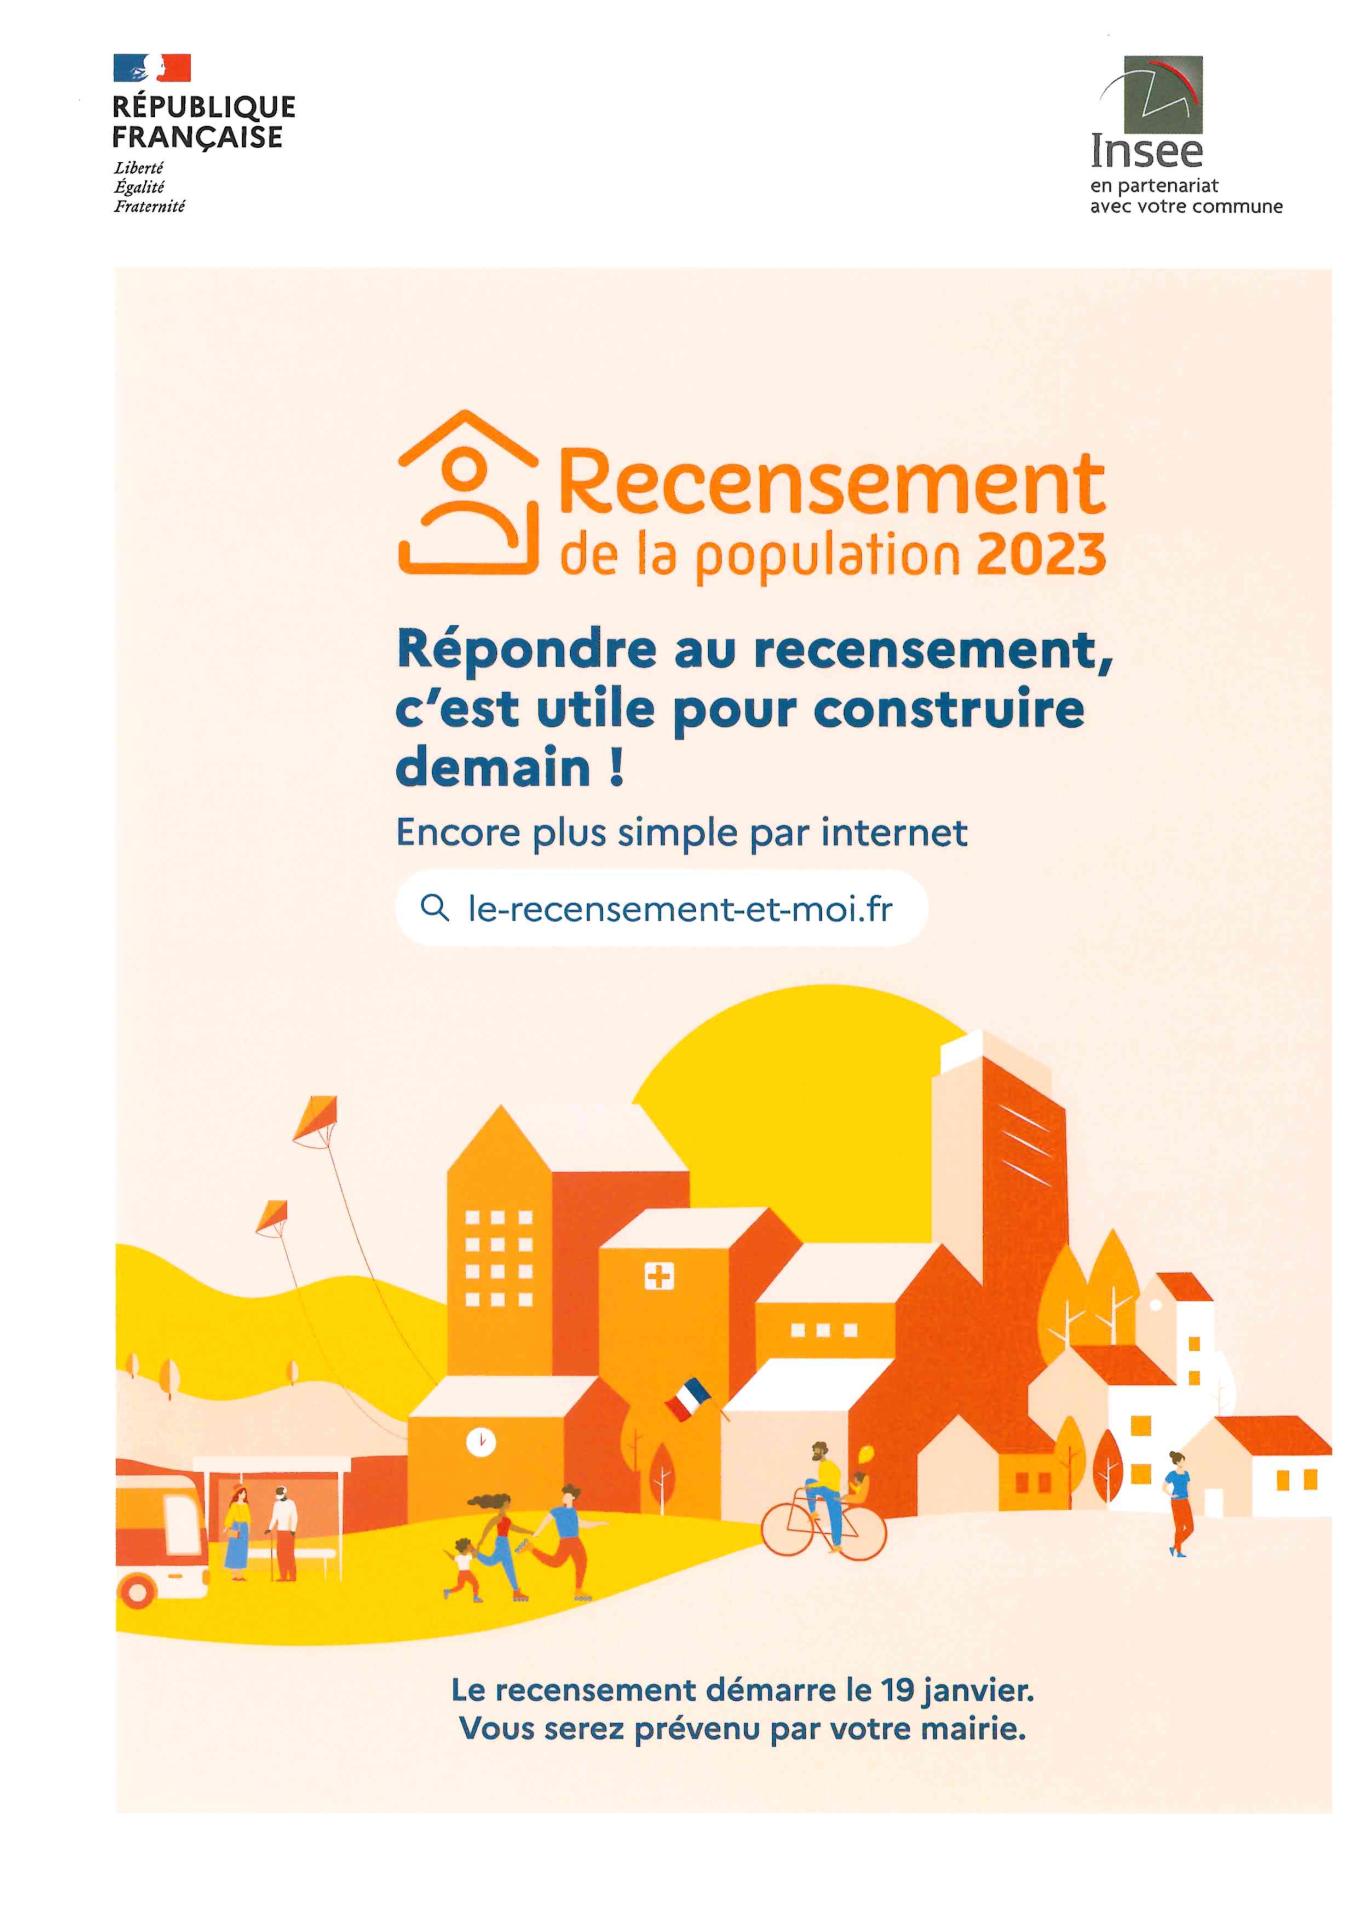 RECENCEMENT DE LA POPULATION 2023